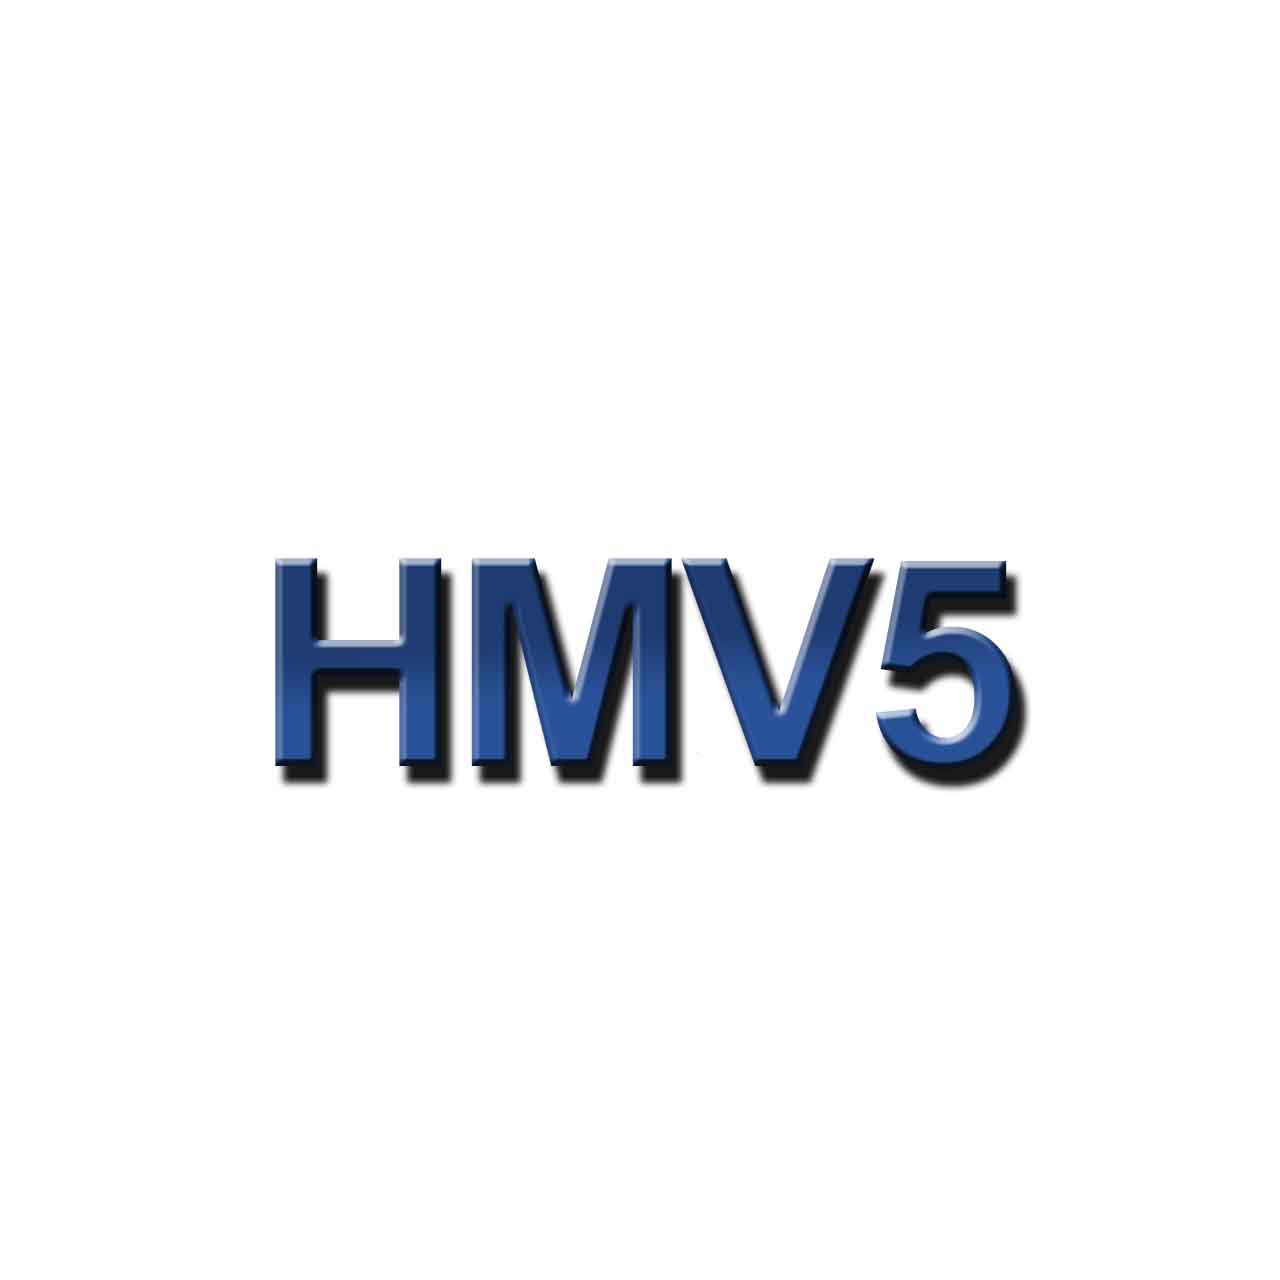 HMV5